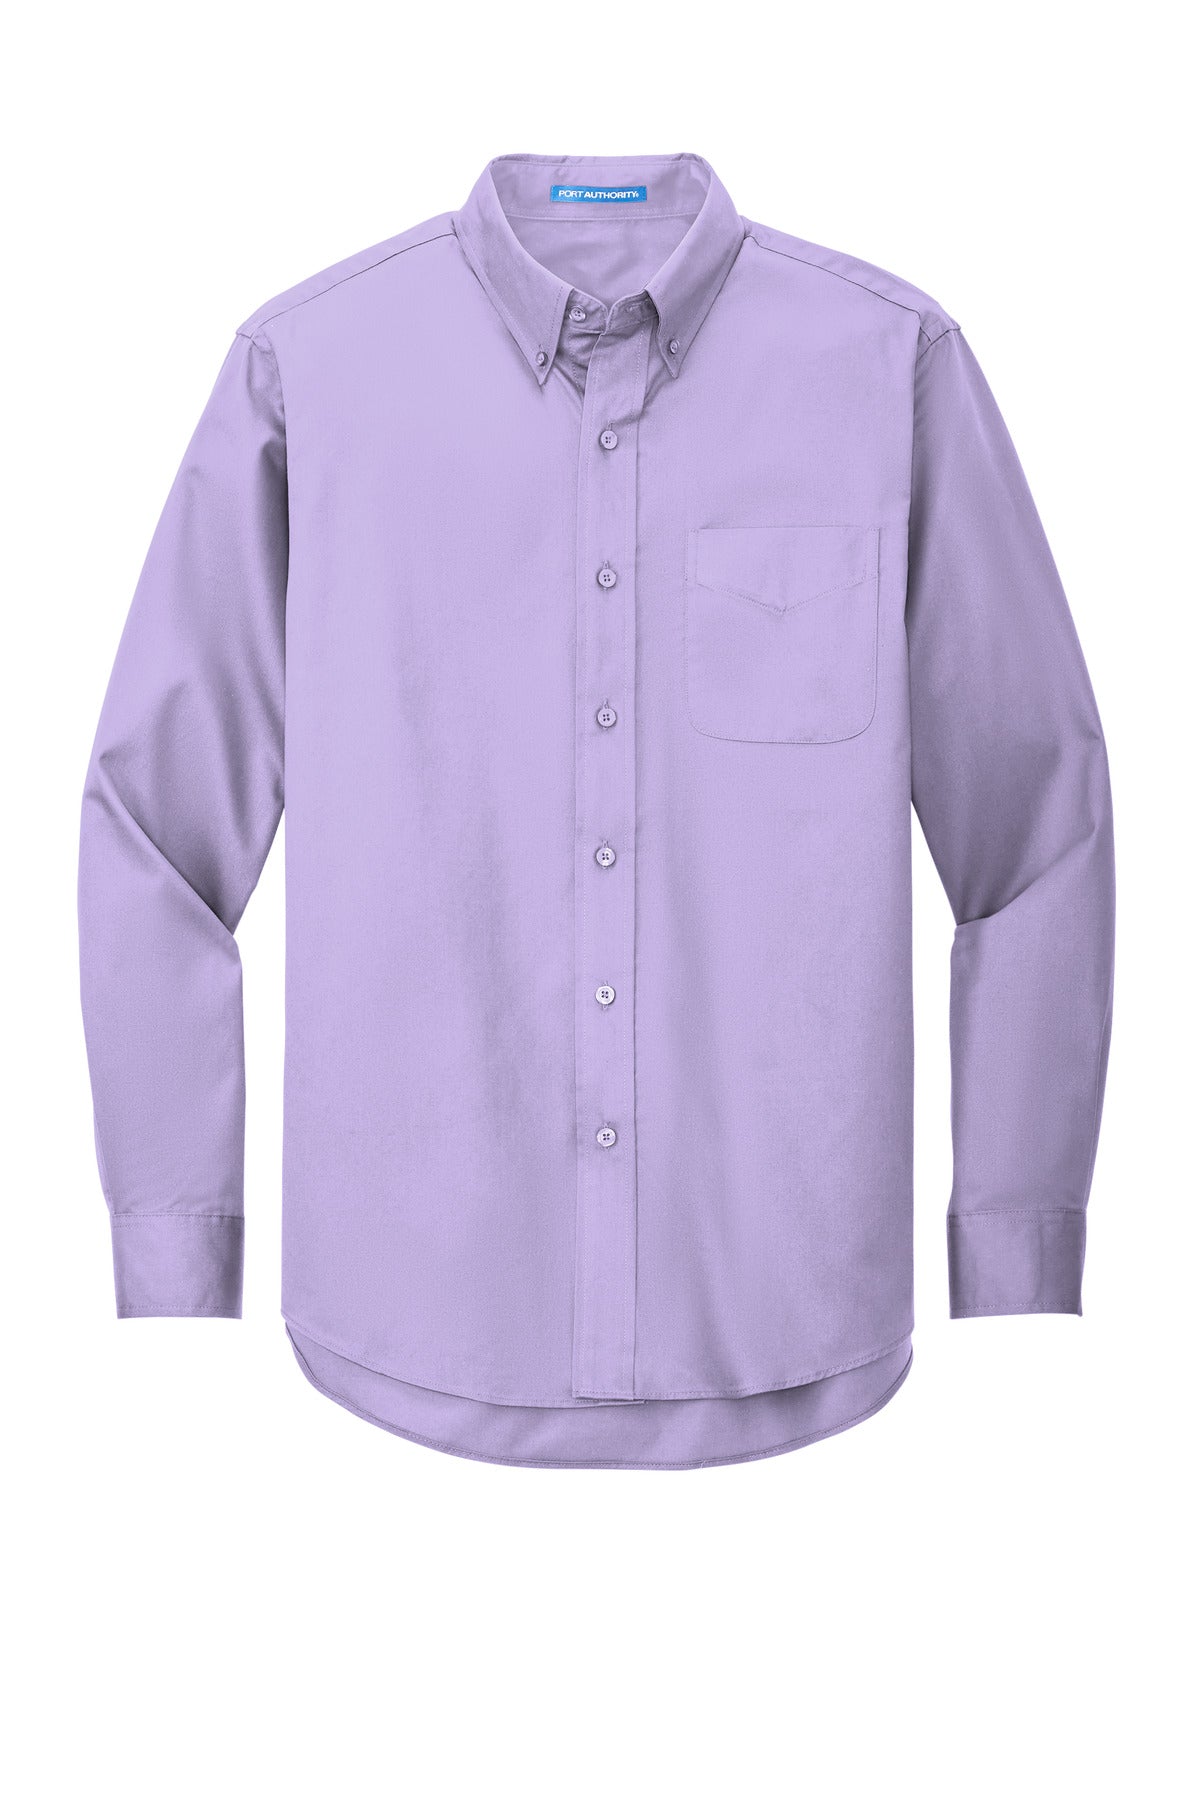 [CUSTOM] Long Sleeve Dress Shirt (Unisex) (Light Colors) [S608]